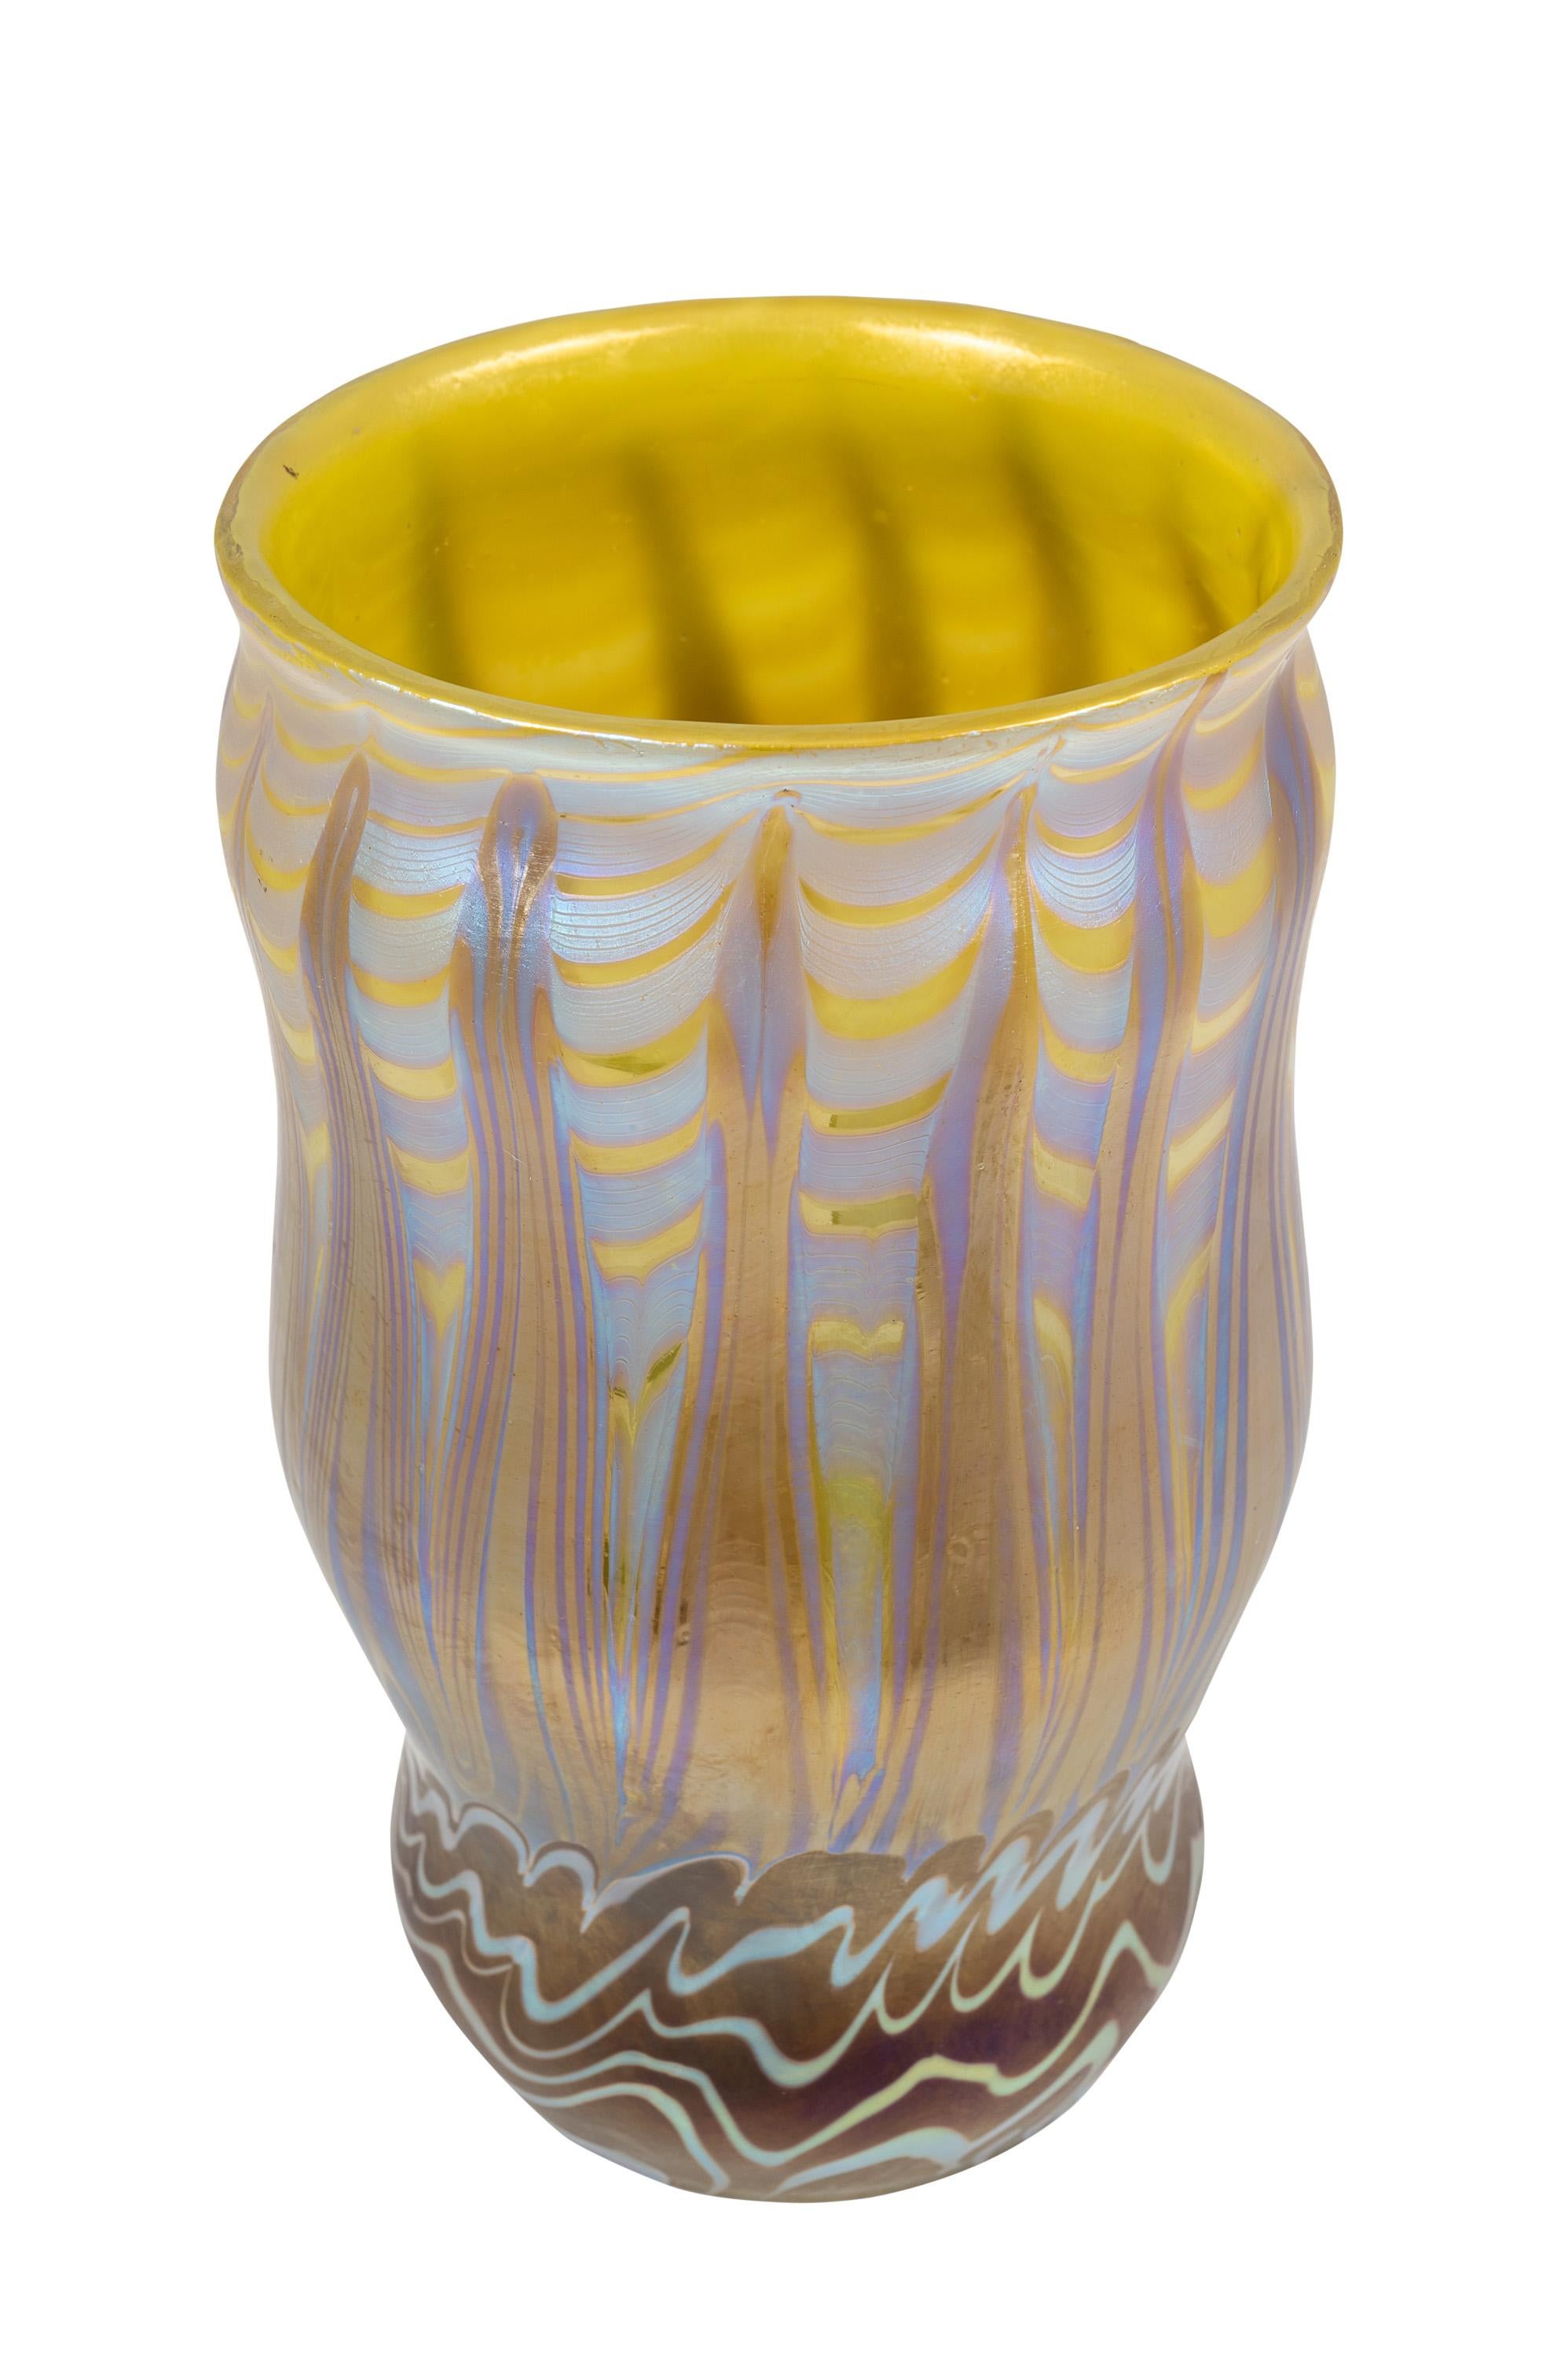 Austrian Bohemian Glass Vase Loetz circa 1900 Signed Art Nouveau Jugendstil Yellow Brown For Sale